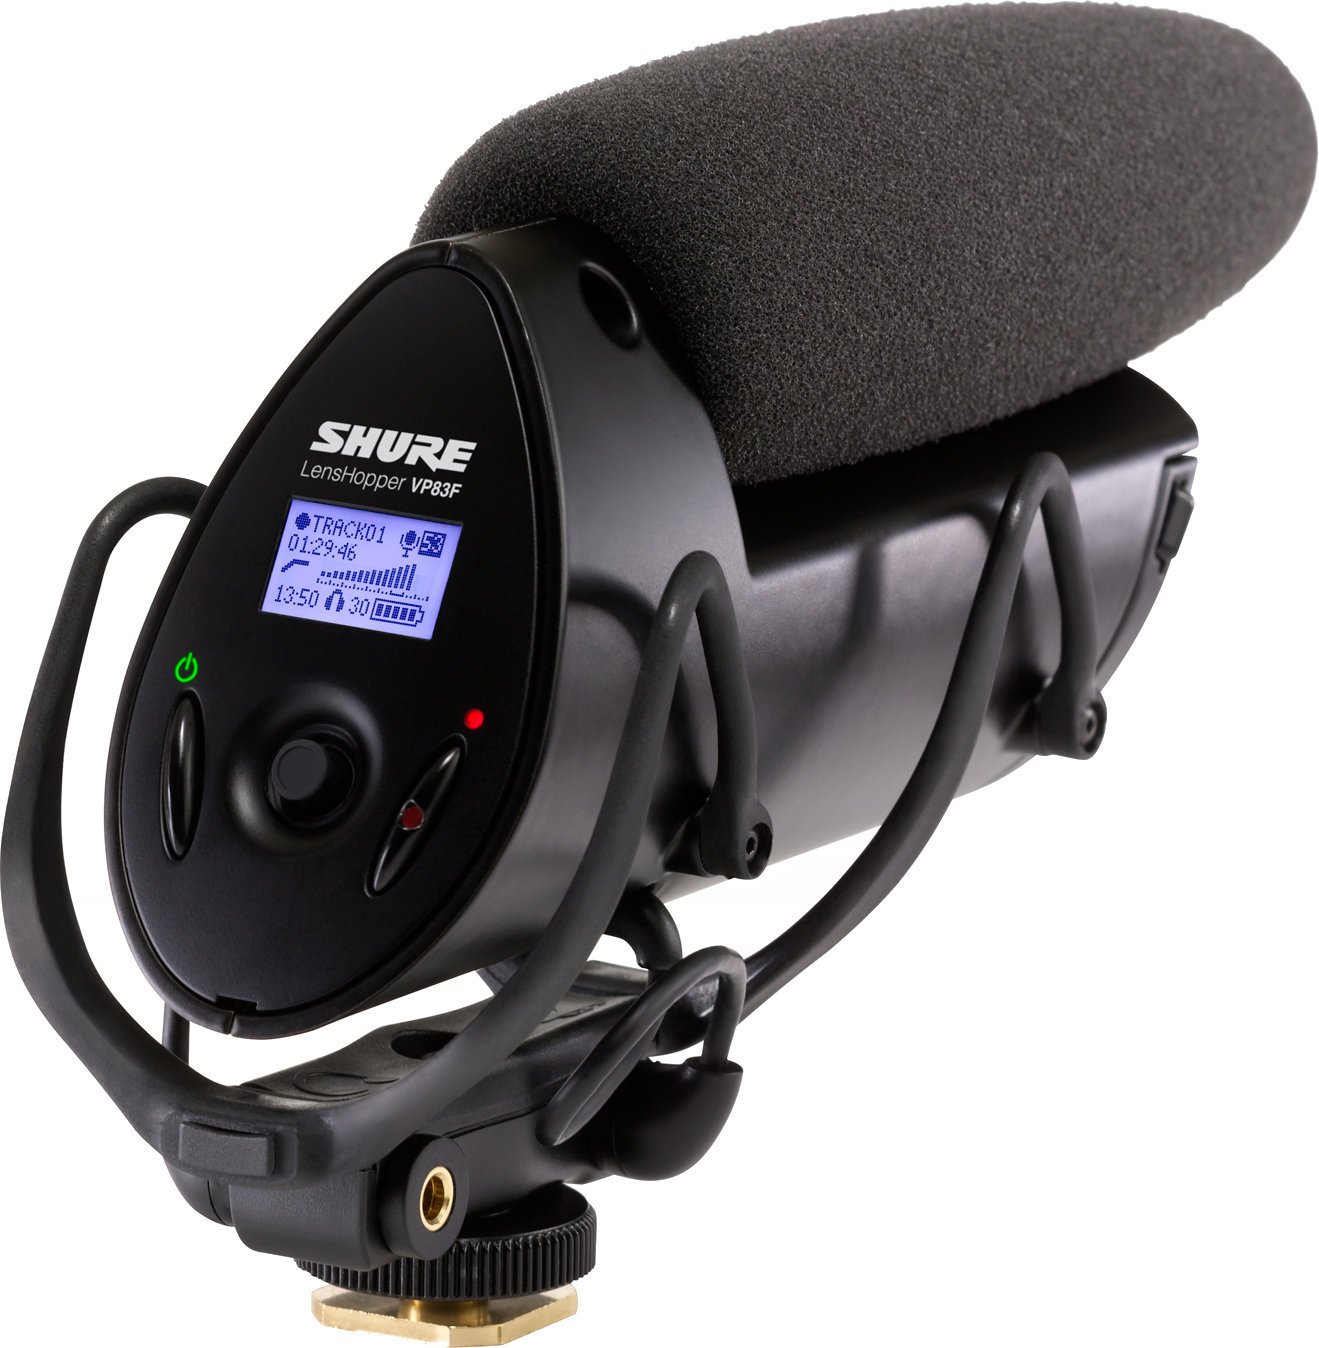 Videomicrofoon Shure VP83F LensHopper